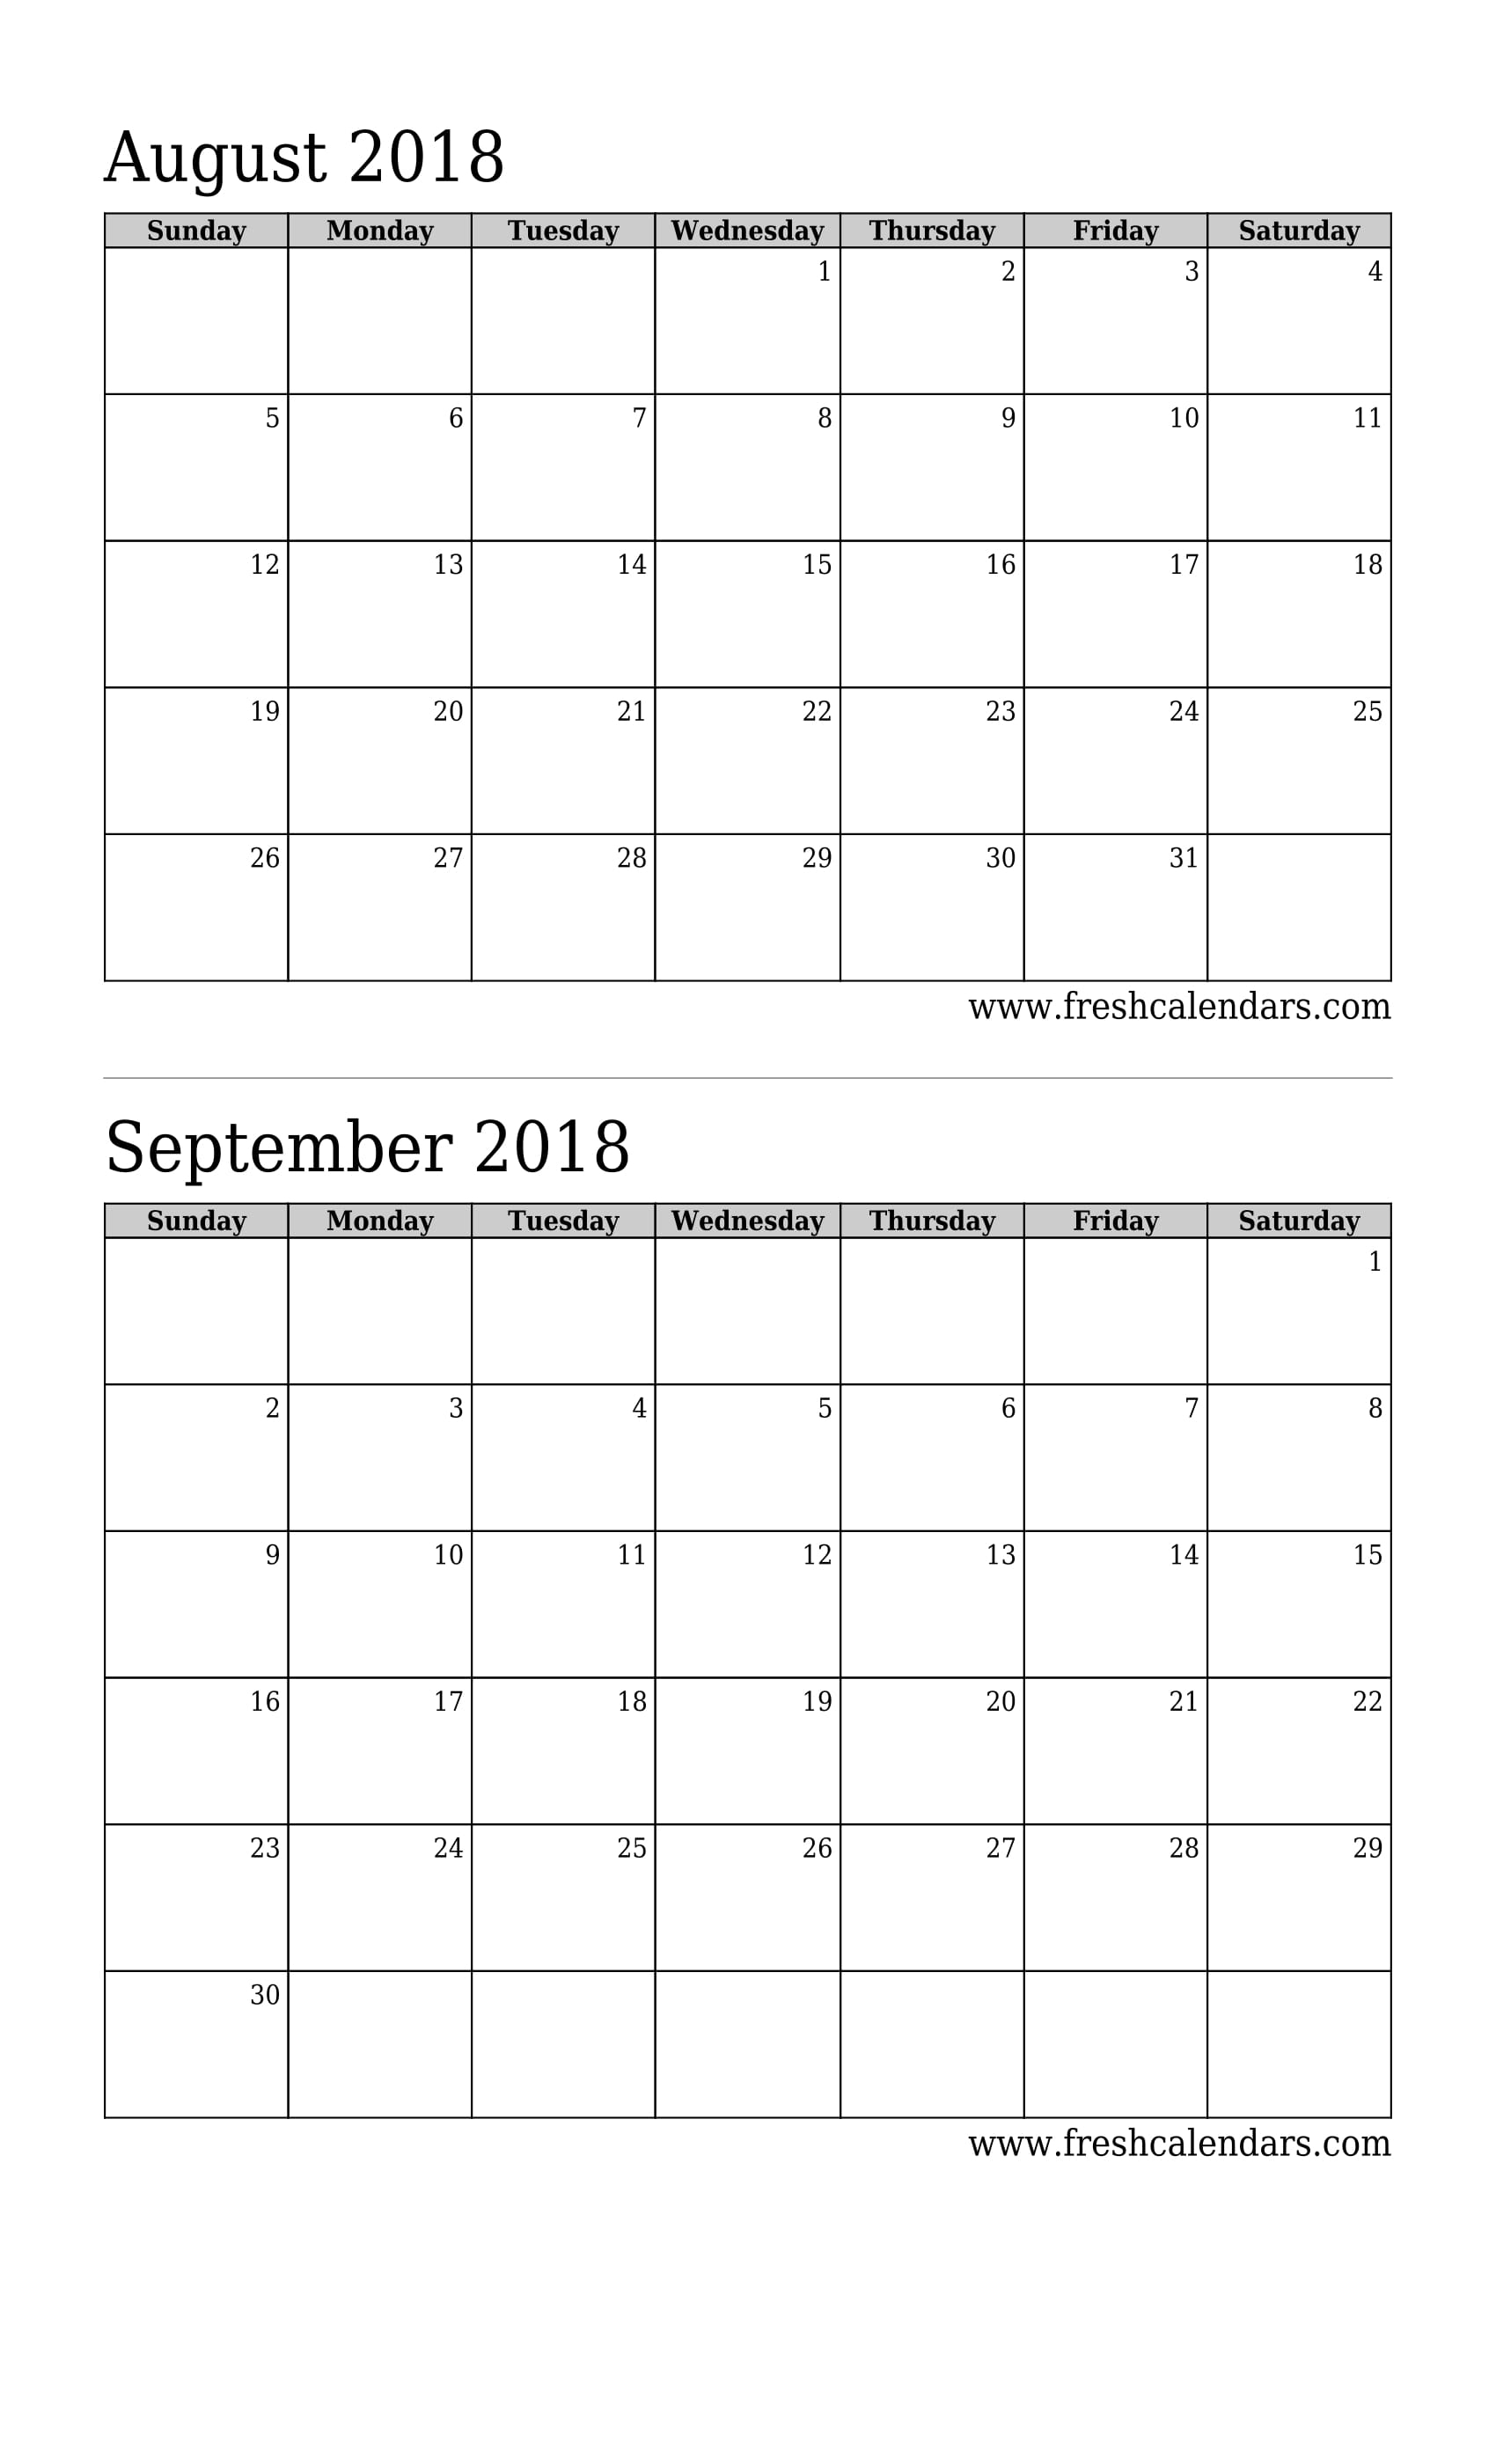 August 2018 Calendar Printable - Fresh Calendars with regard to Month Of August On A Calendar